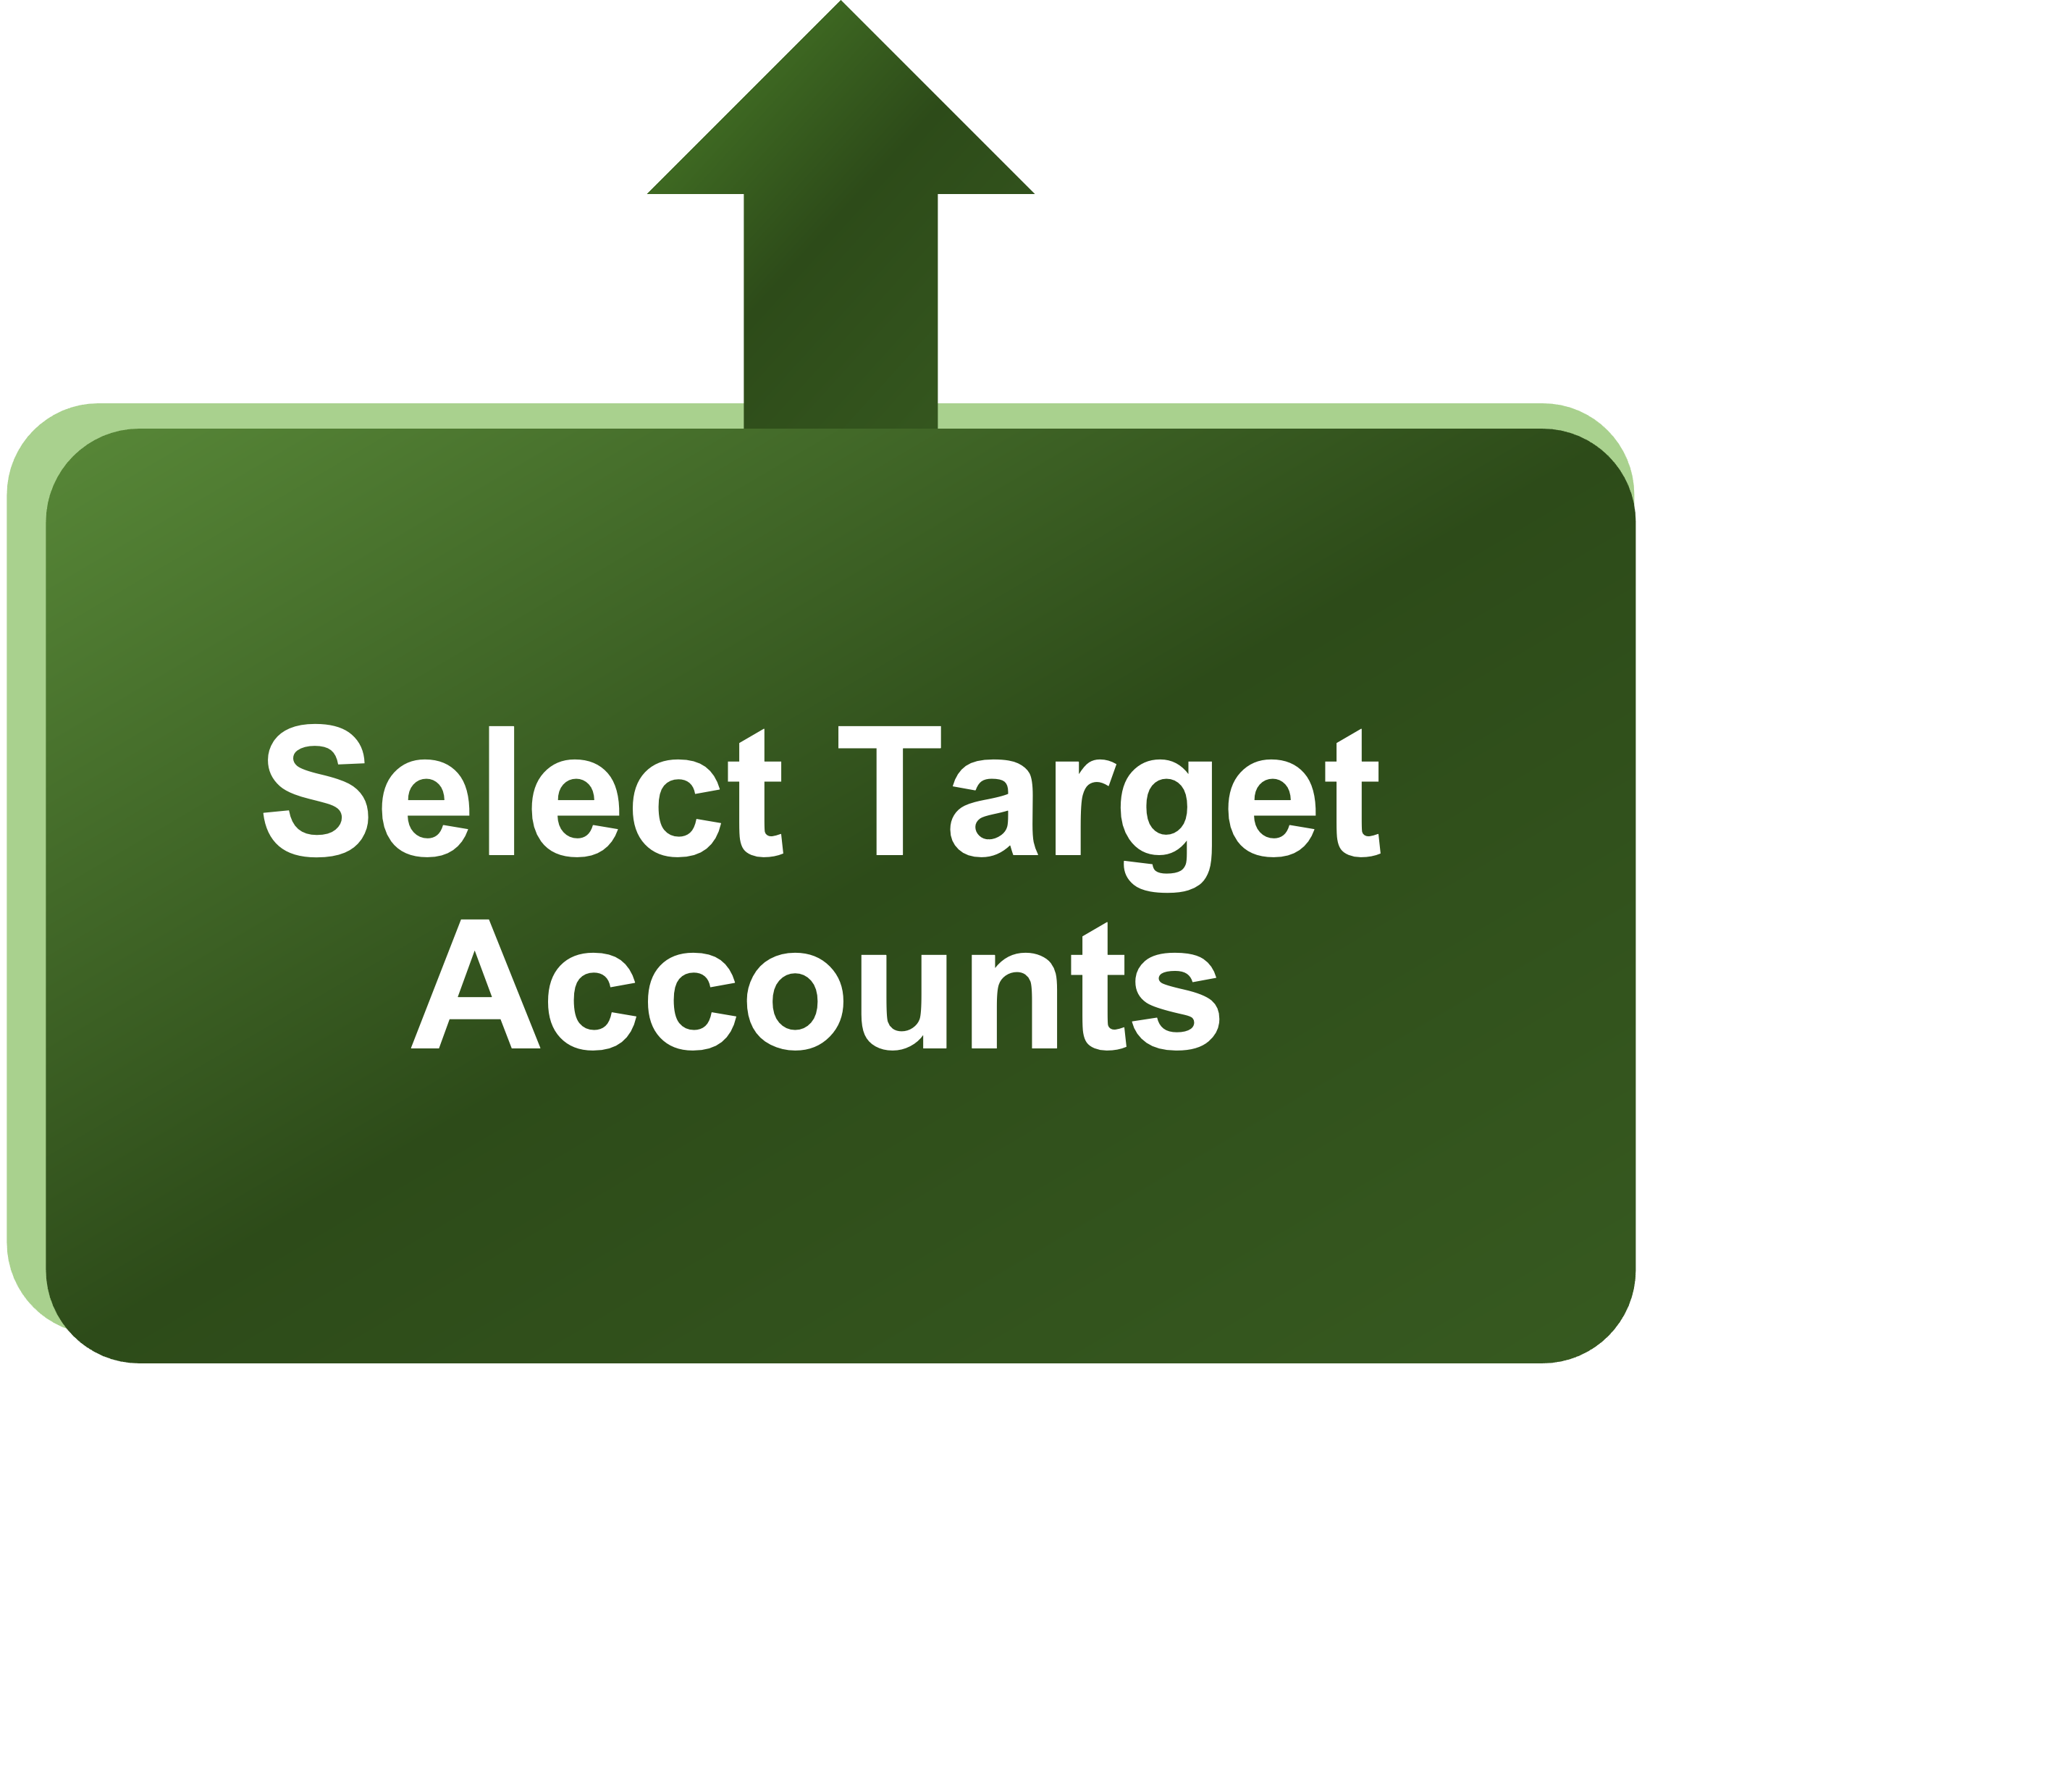 Select Target Accounts